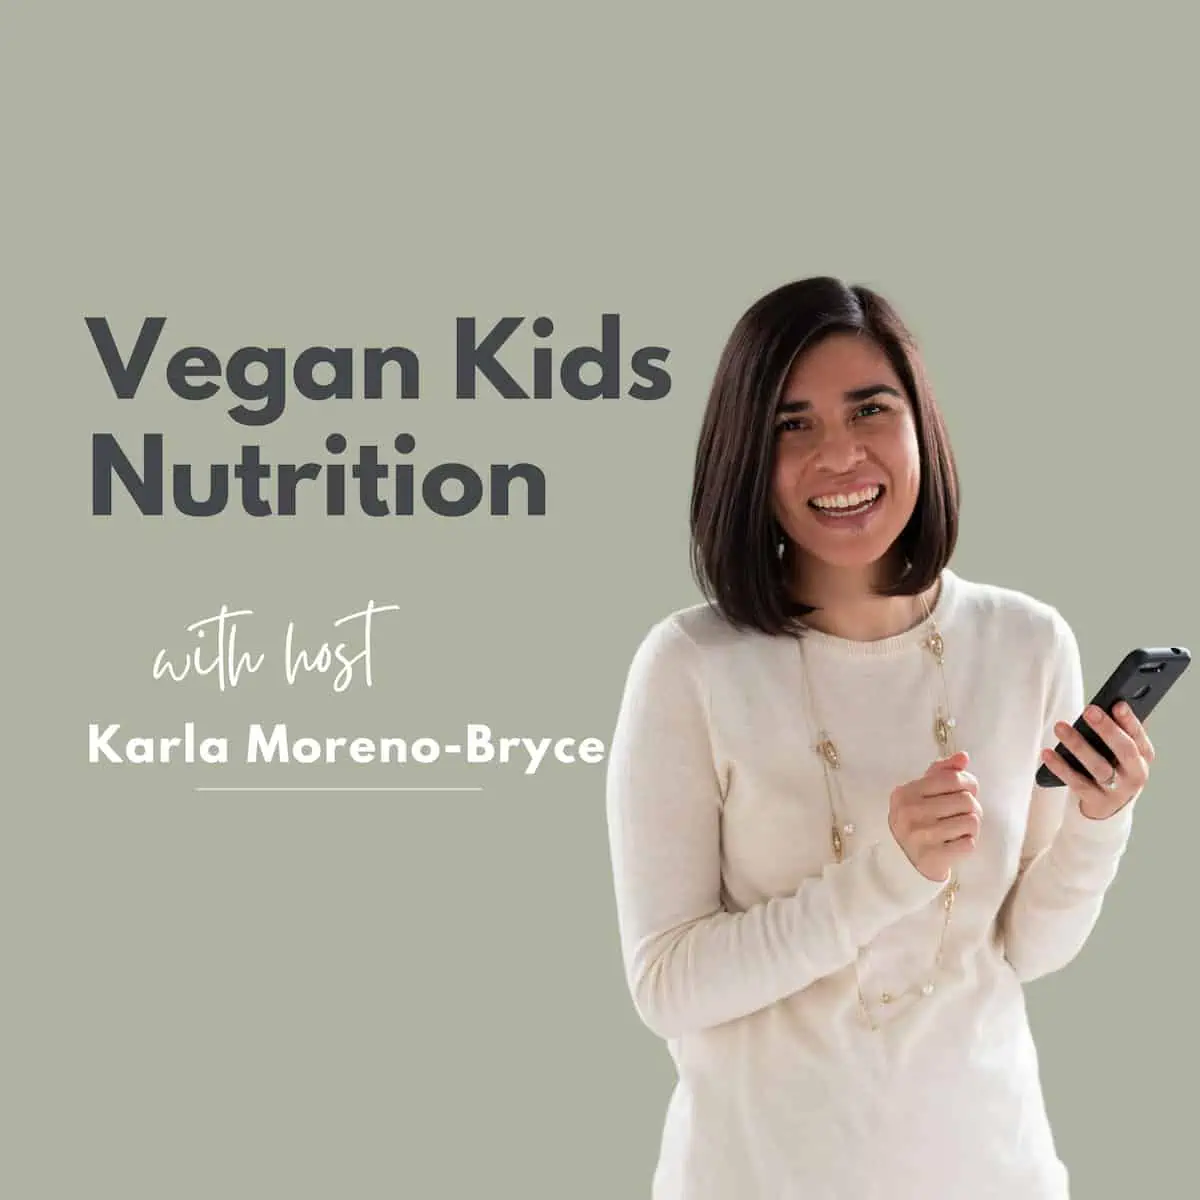 Vegan Kids Nutrition with host Karla Moreno-Bryce cover art.